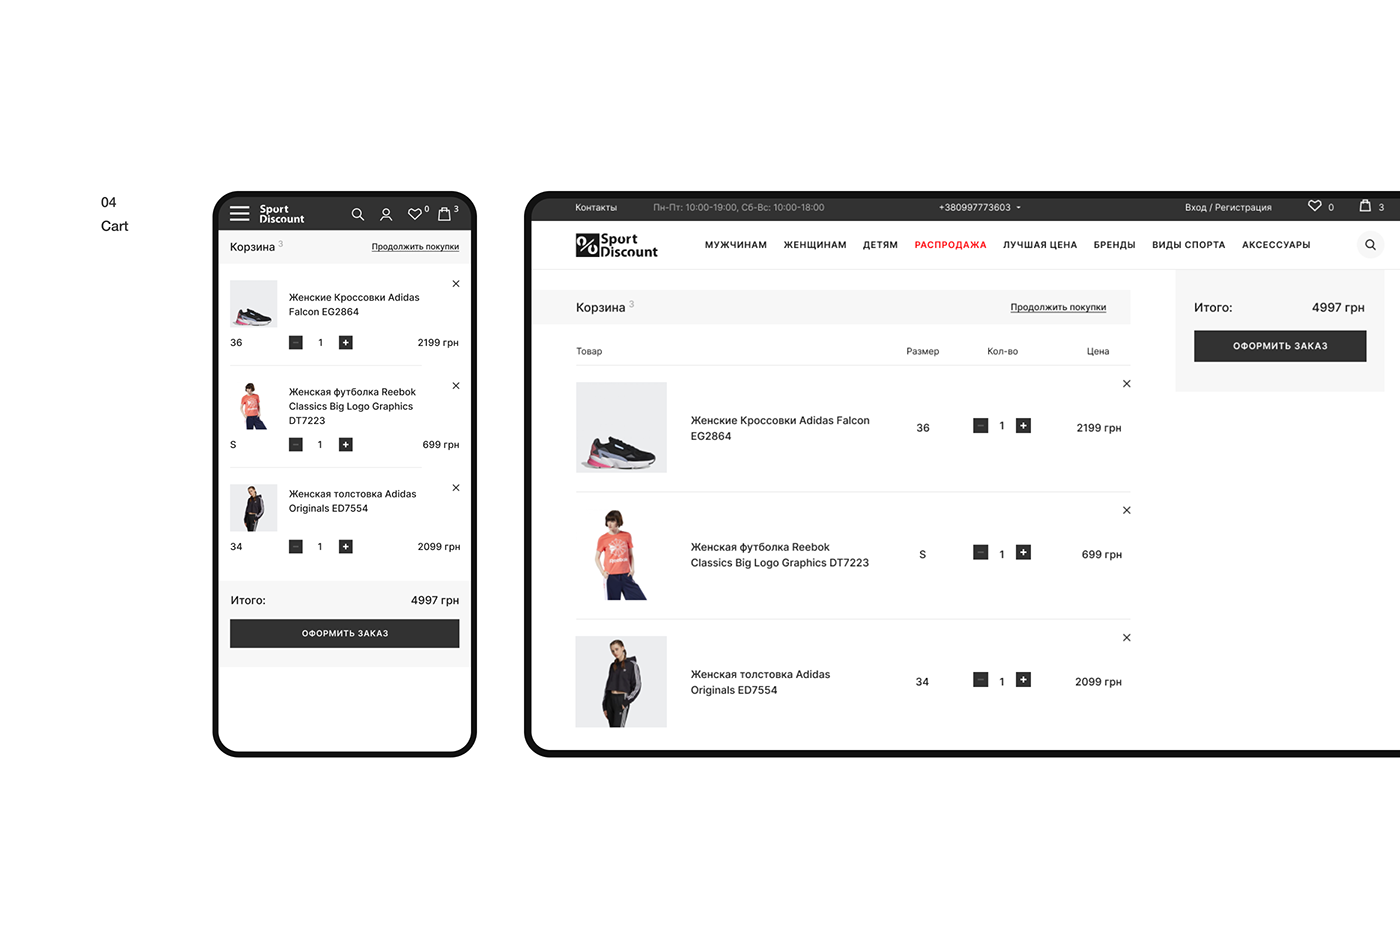 adidas design e-commerce Ecommerce mobile design Nike Online shop puma redesign ux